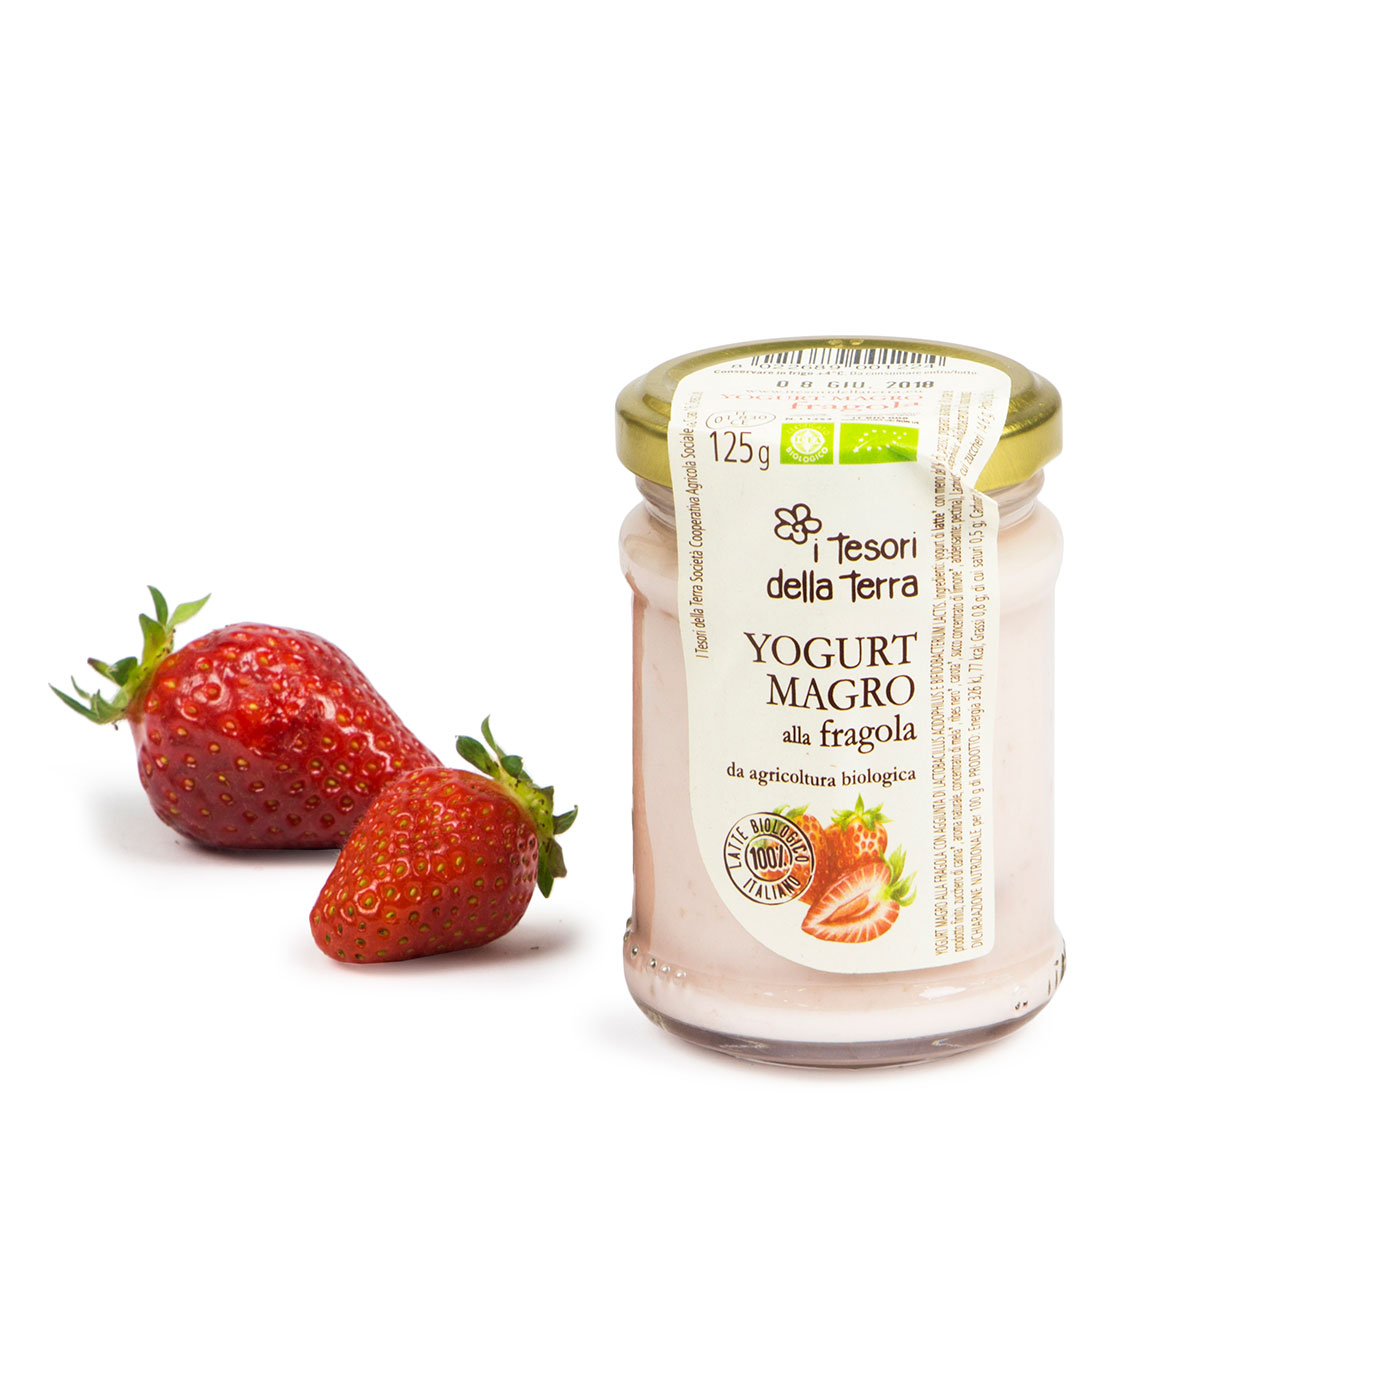 Yogurt magro alla fragola bio 125g Tesori della Terra